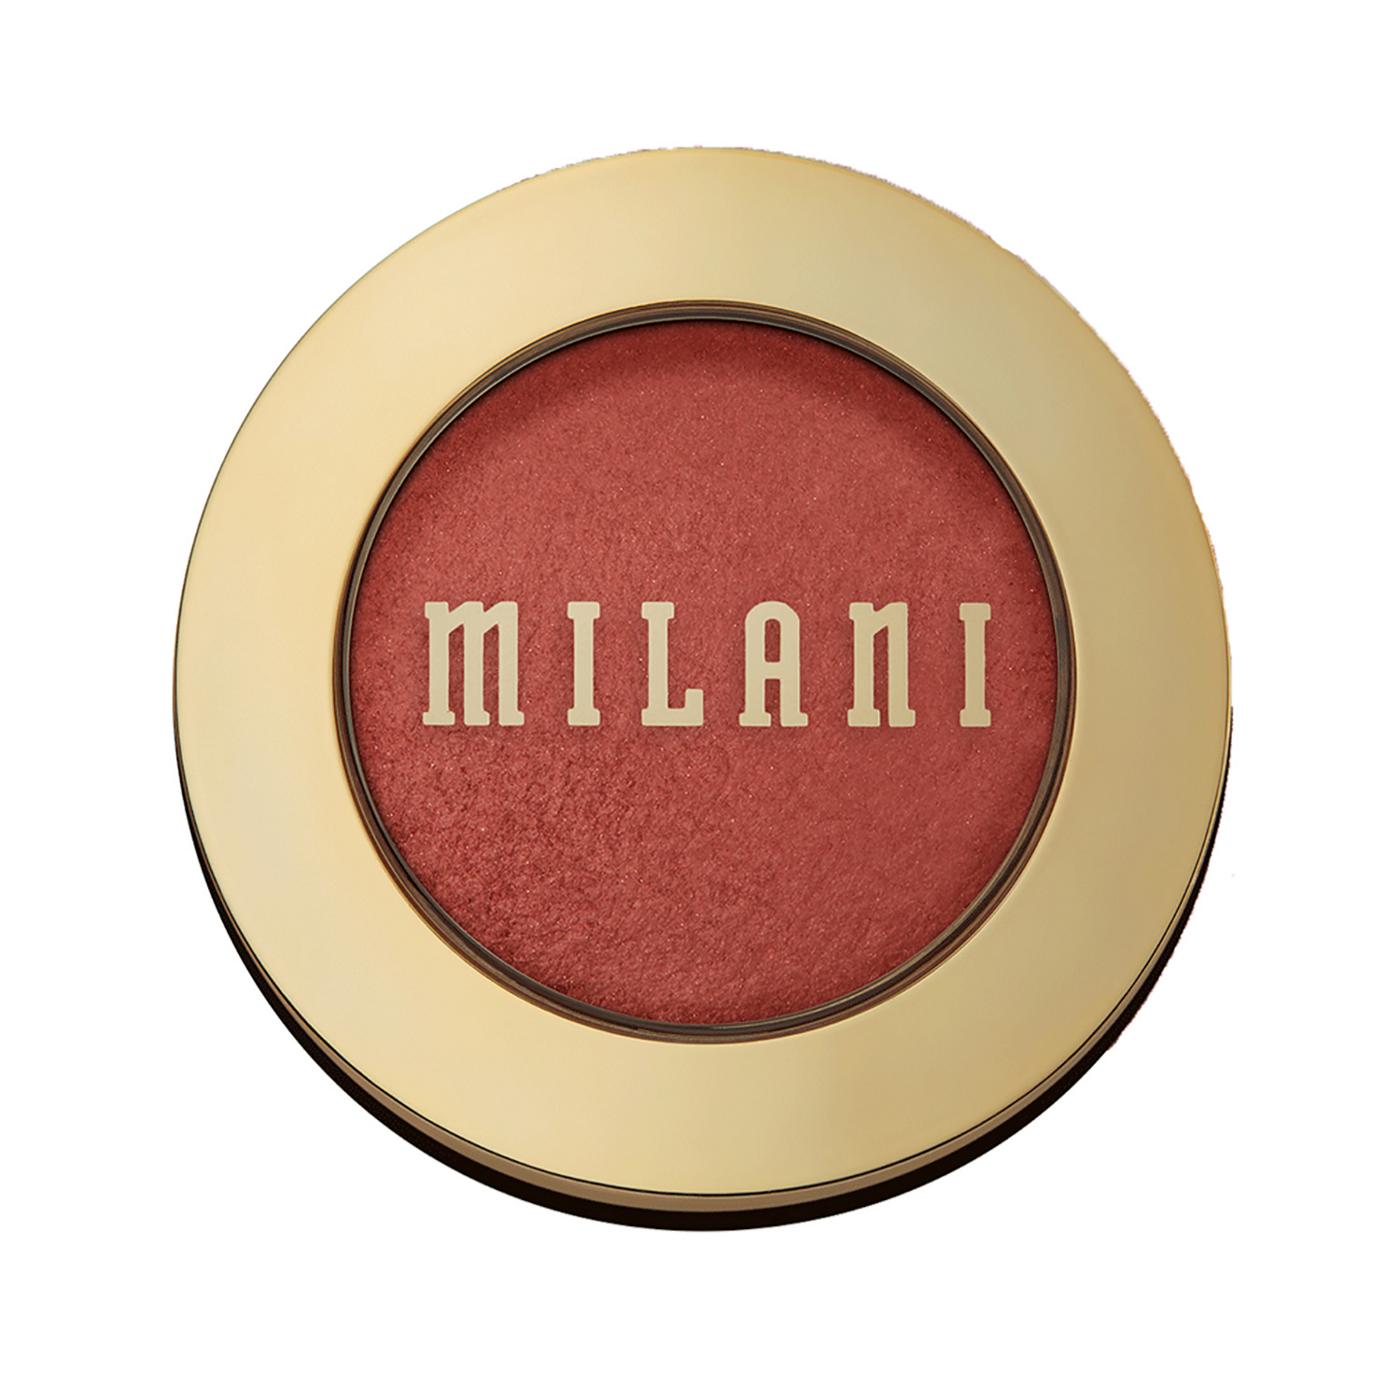 Milani Baked Blush - Cocoa Felicita; image 1 of 3